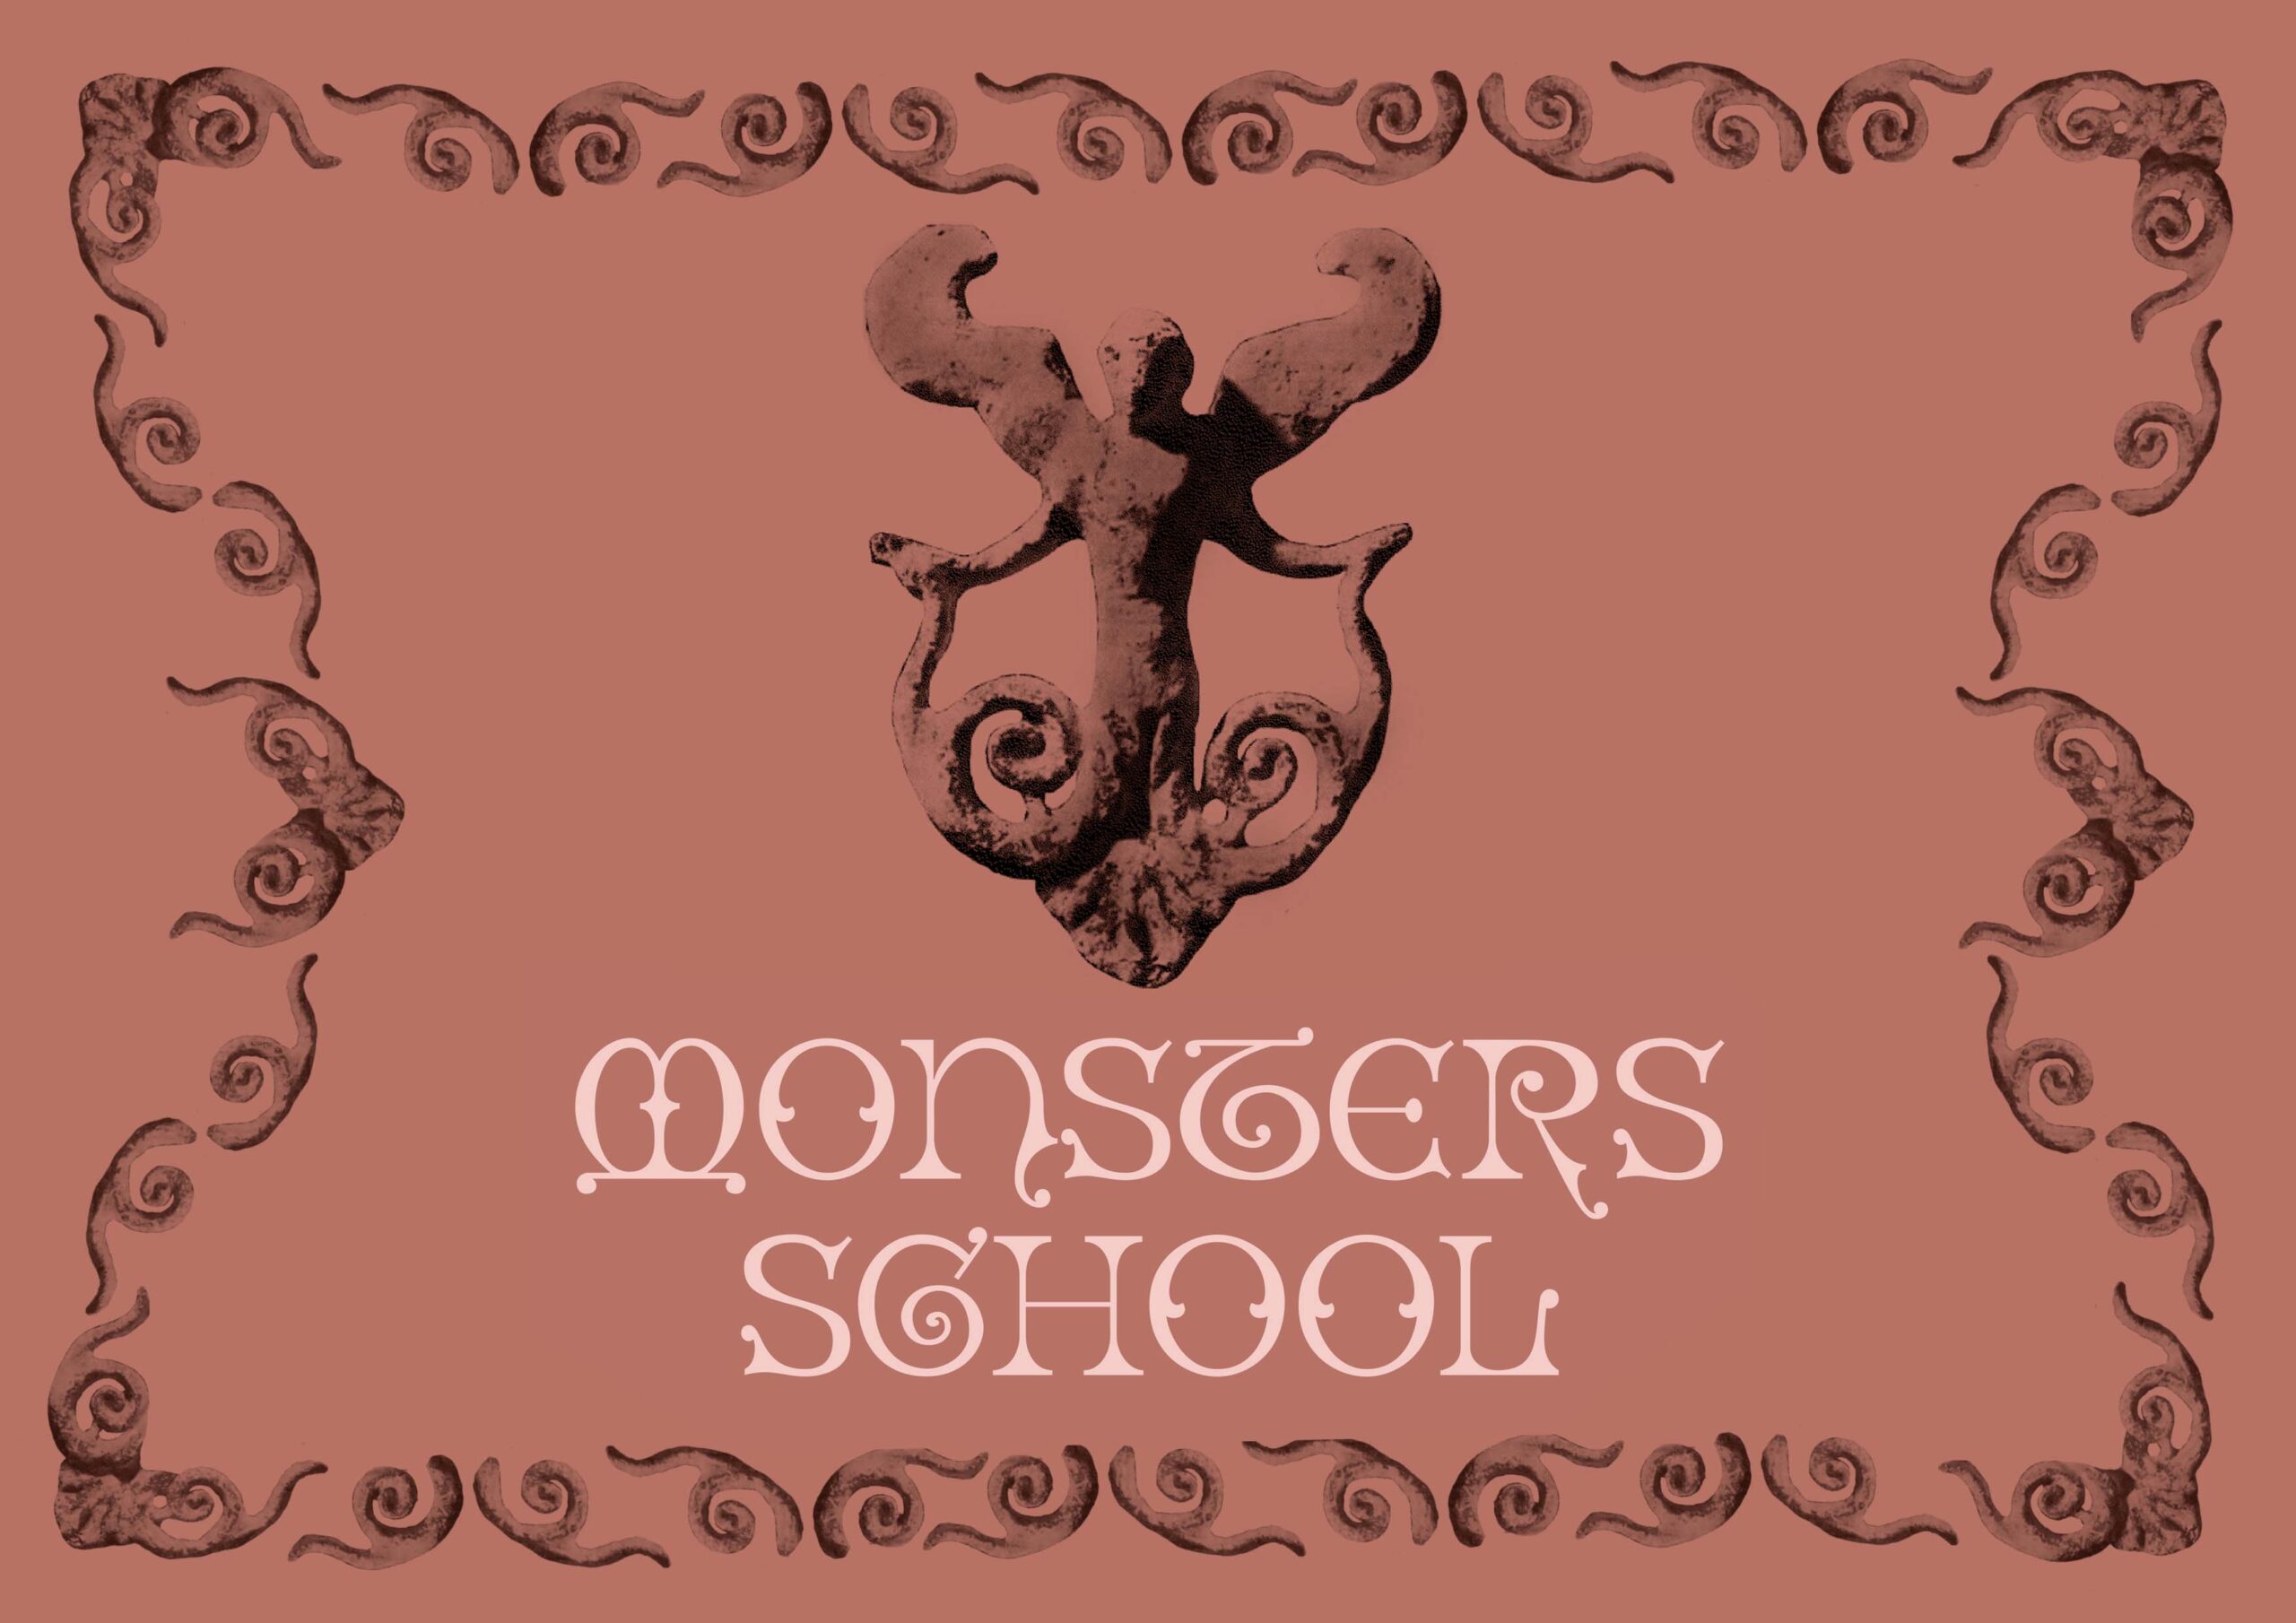 INTRODUCING: MONSTERS SCHOOL